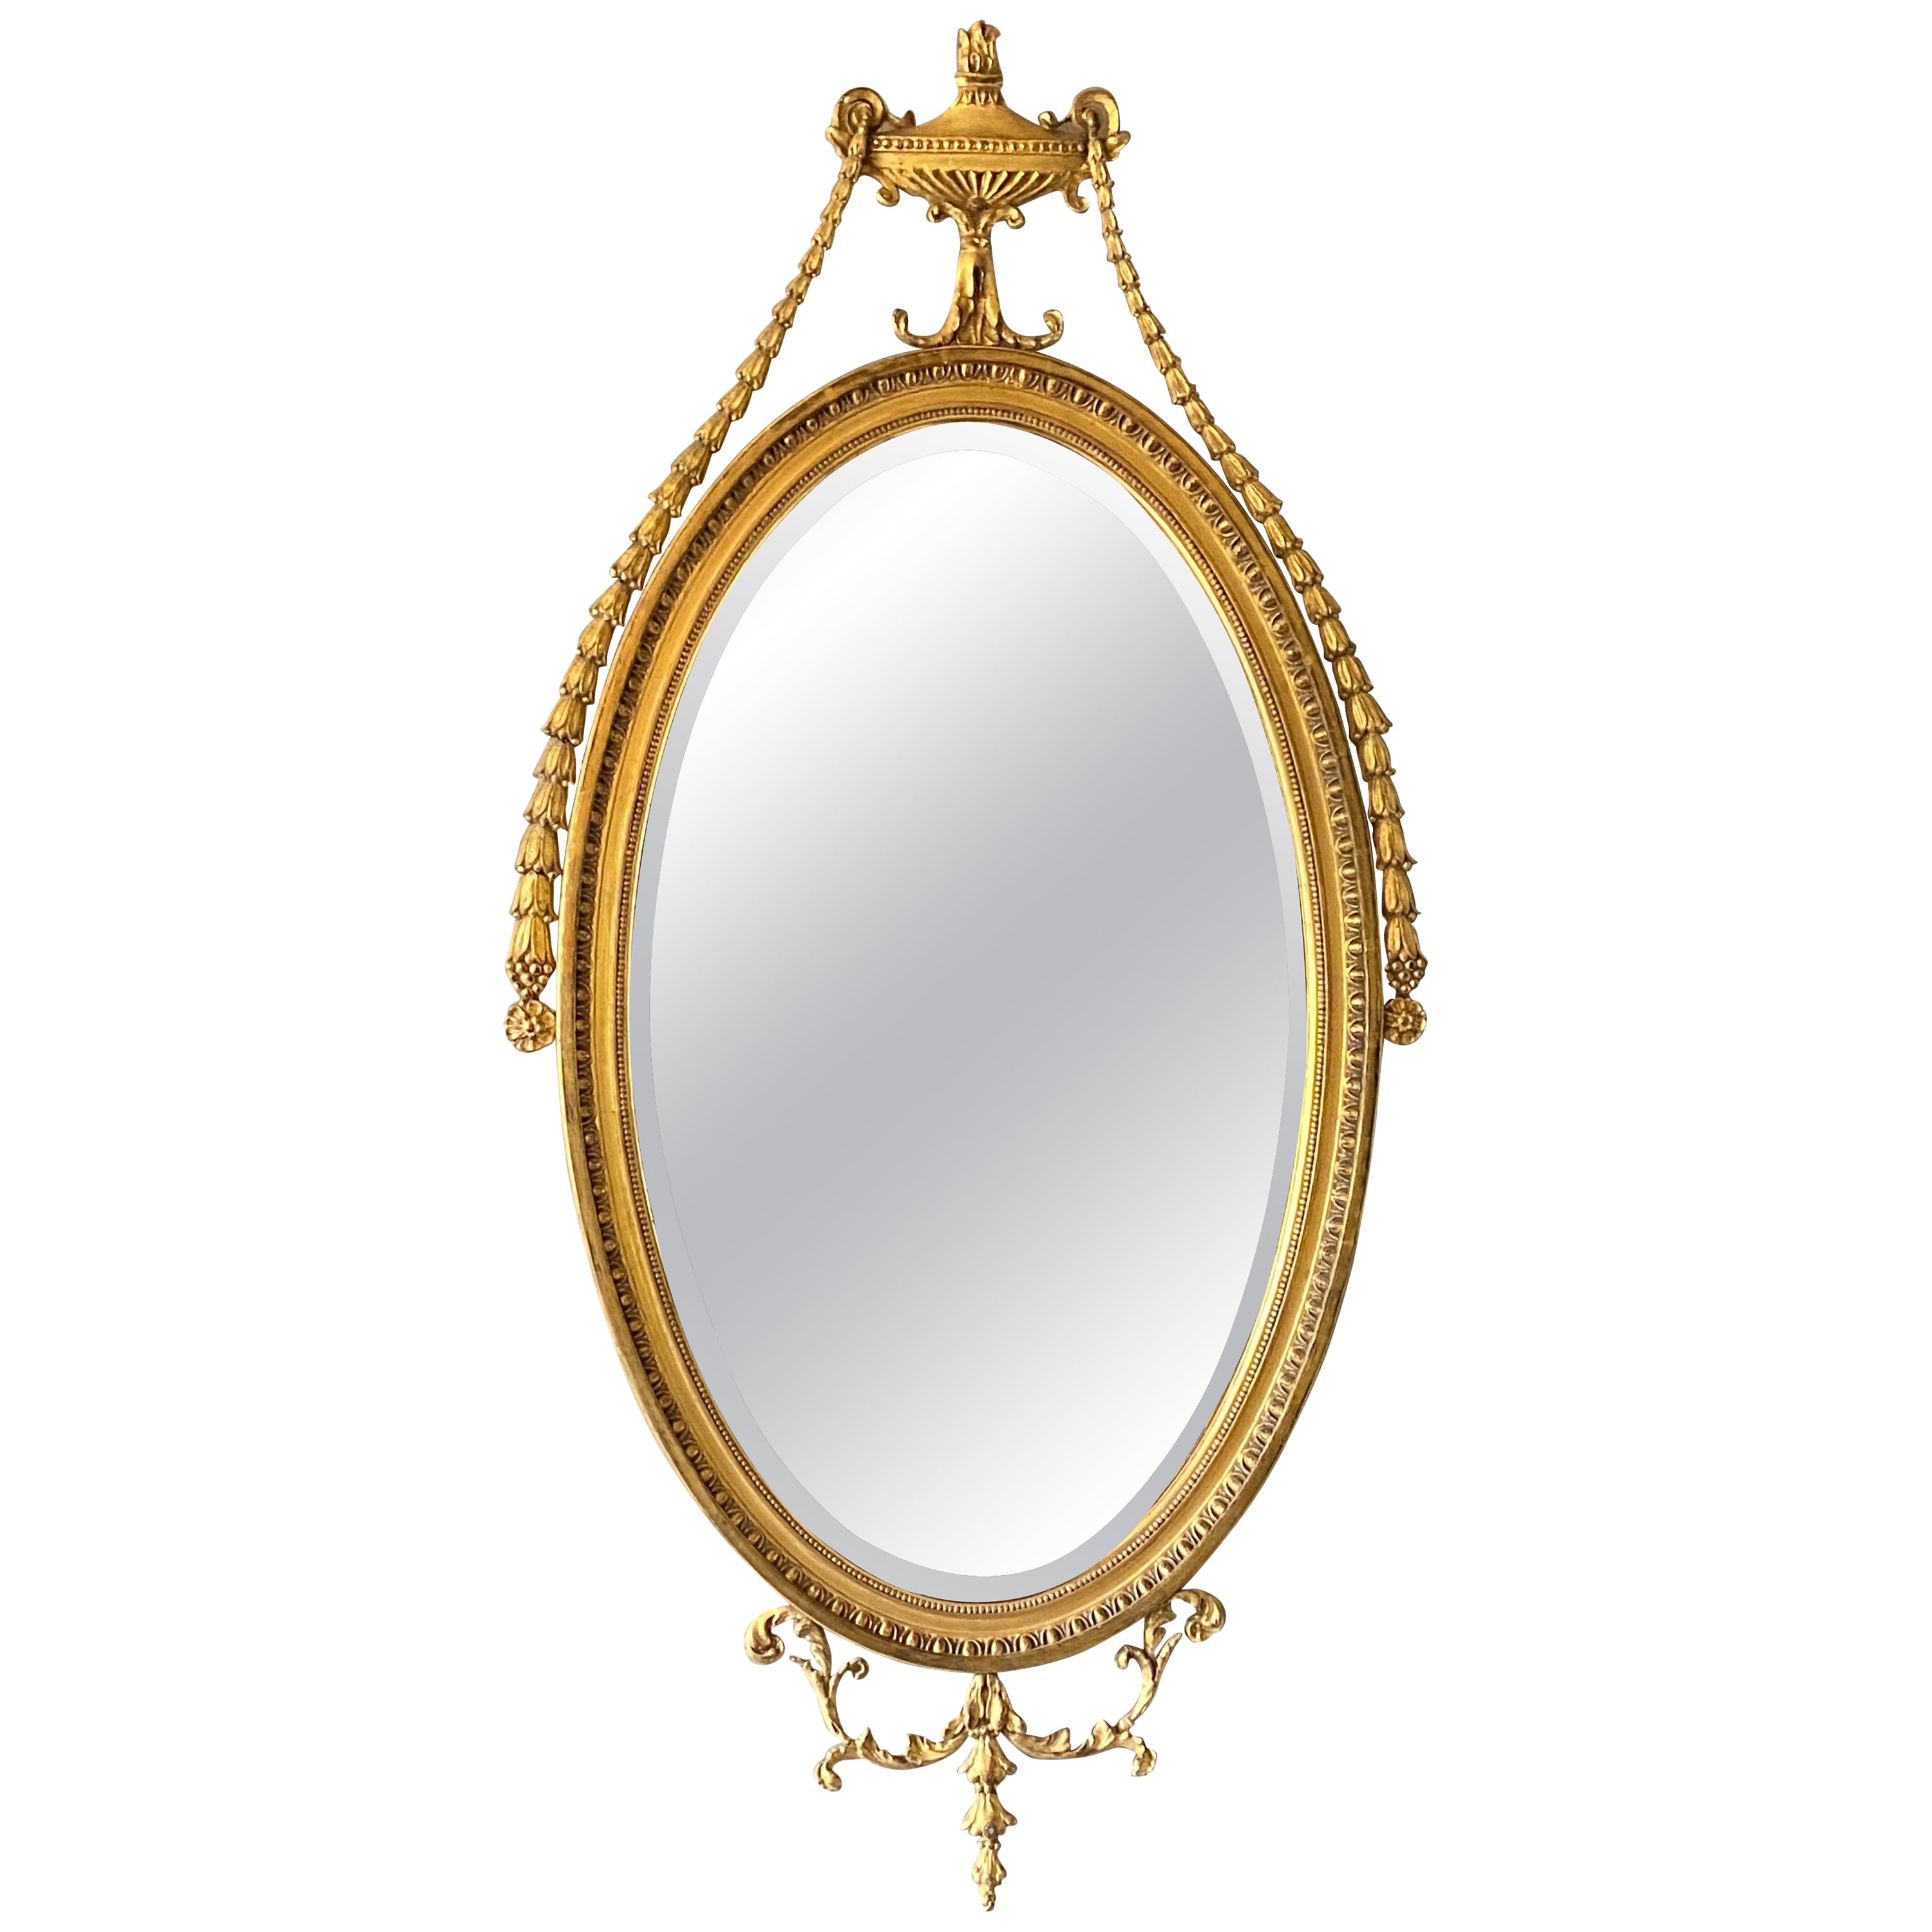 English Adam Style Oval Gilt Mirror, Early 20th Century